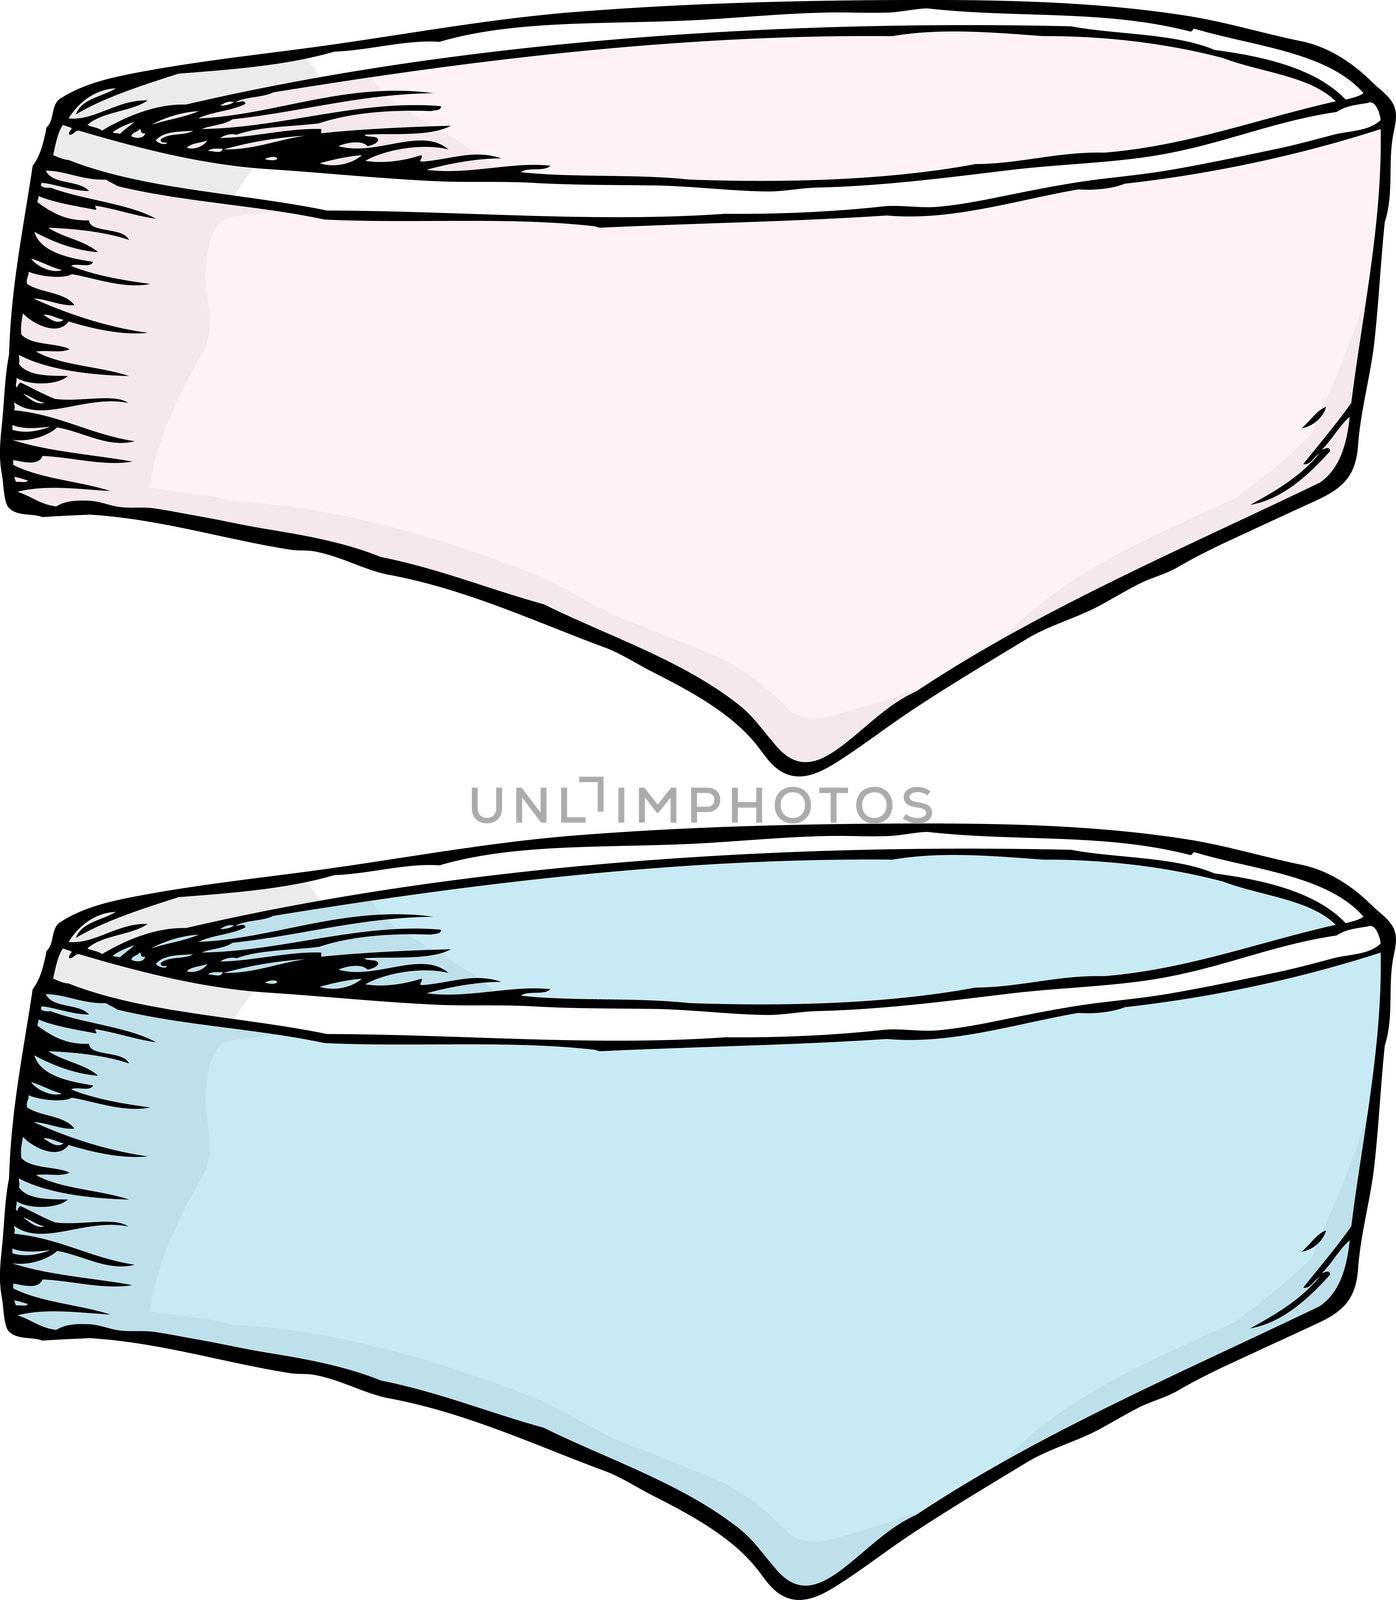 Pink and blue ladies underwear over white background